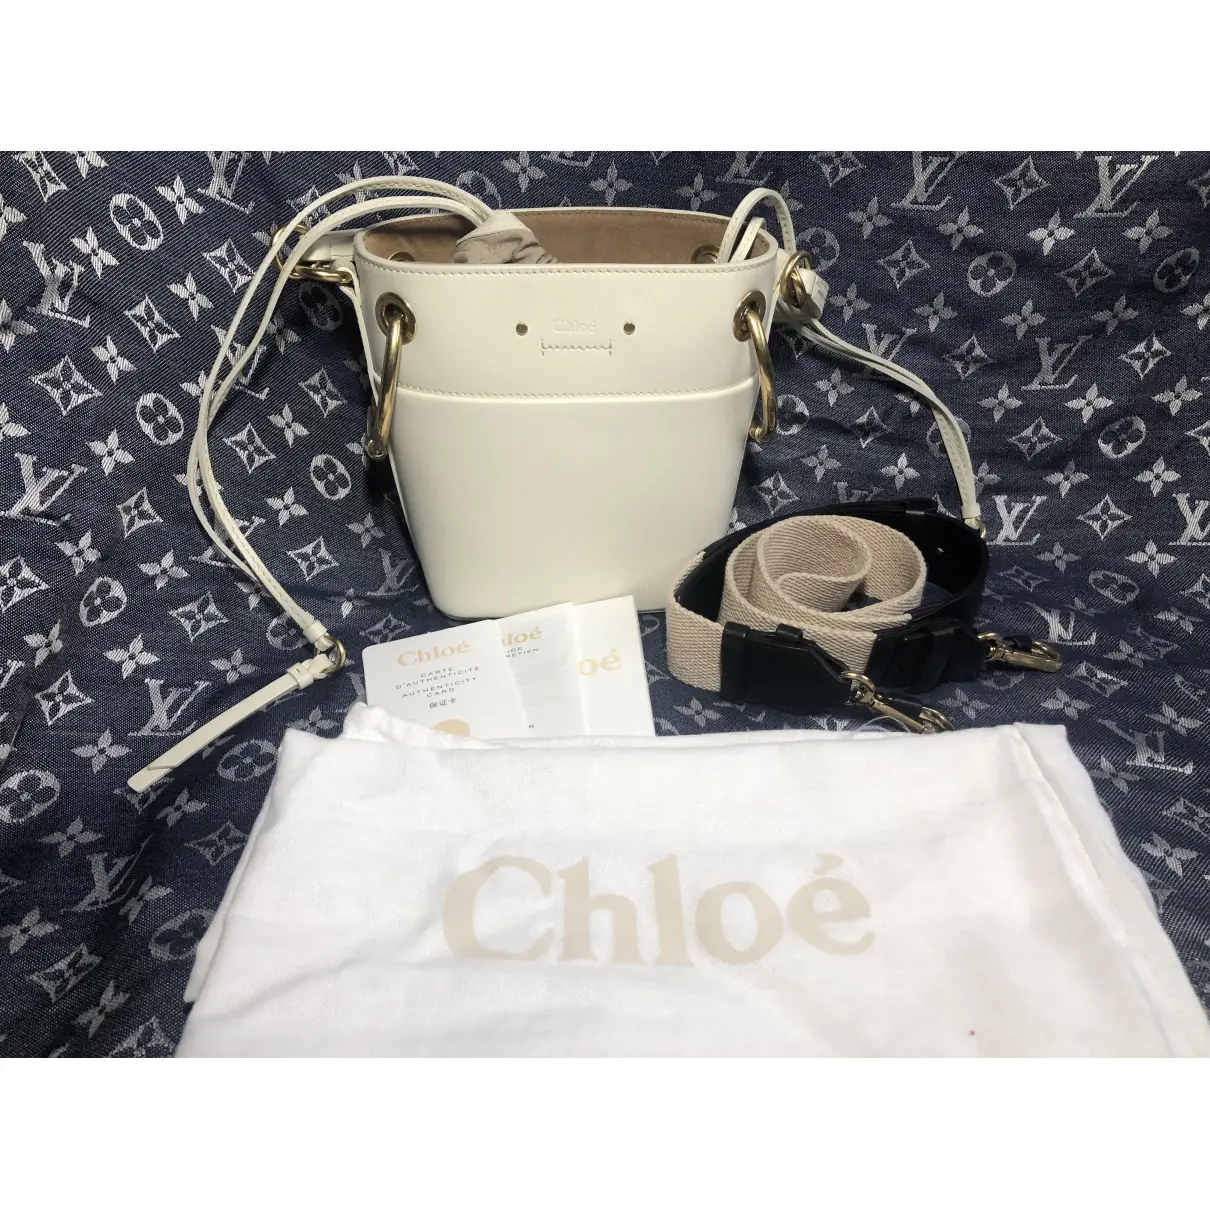 Buy Chloé Roy leather bag online